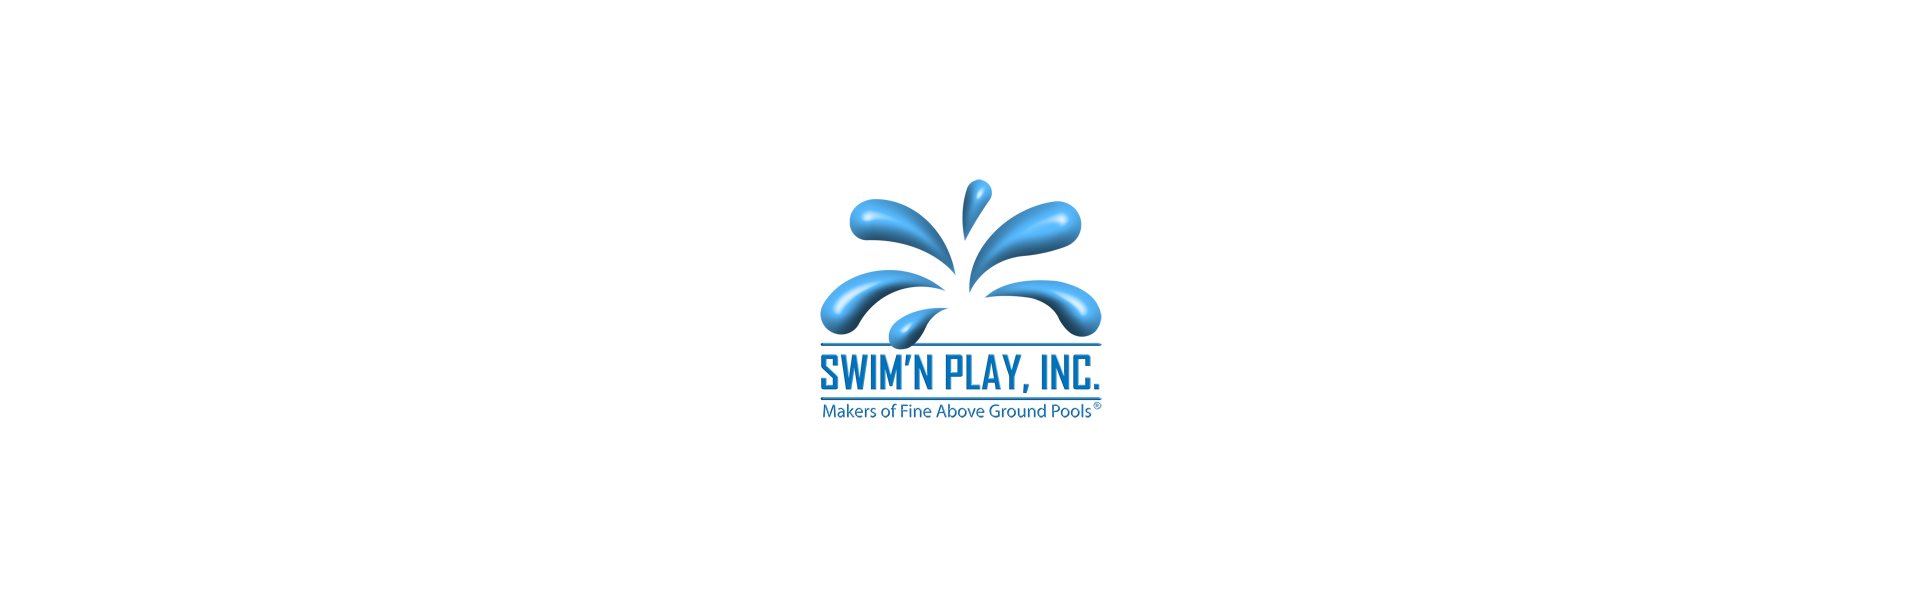 swim-n-play-title-logo